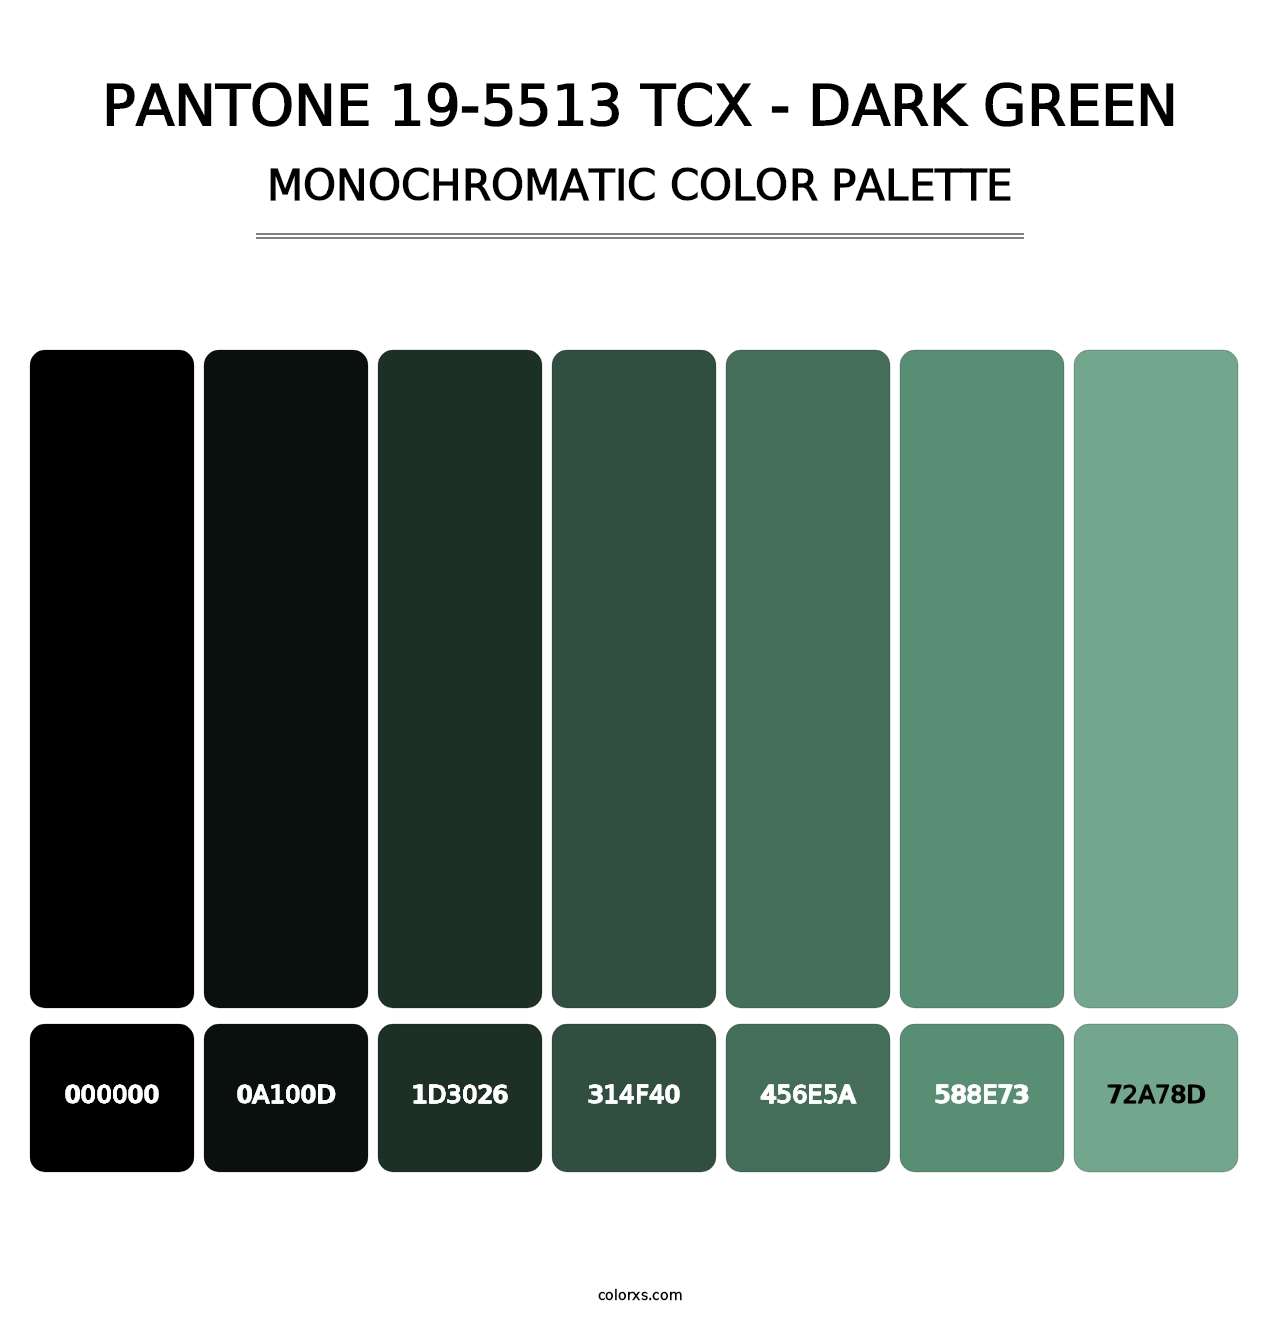 PANTONE 19-5513 TCX - Dark Green - Monochromatic Color Palette